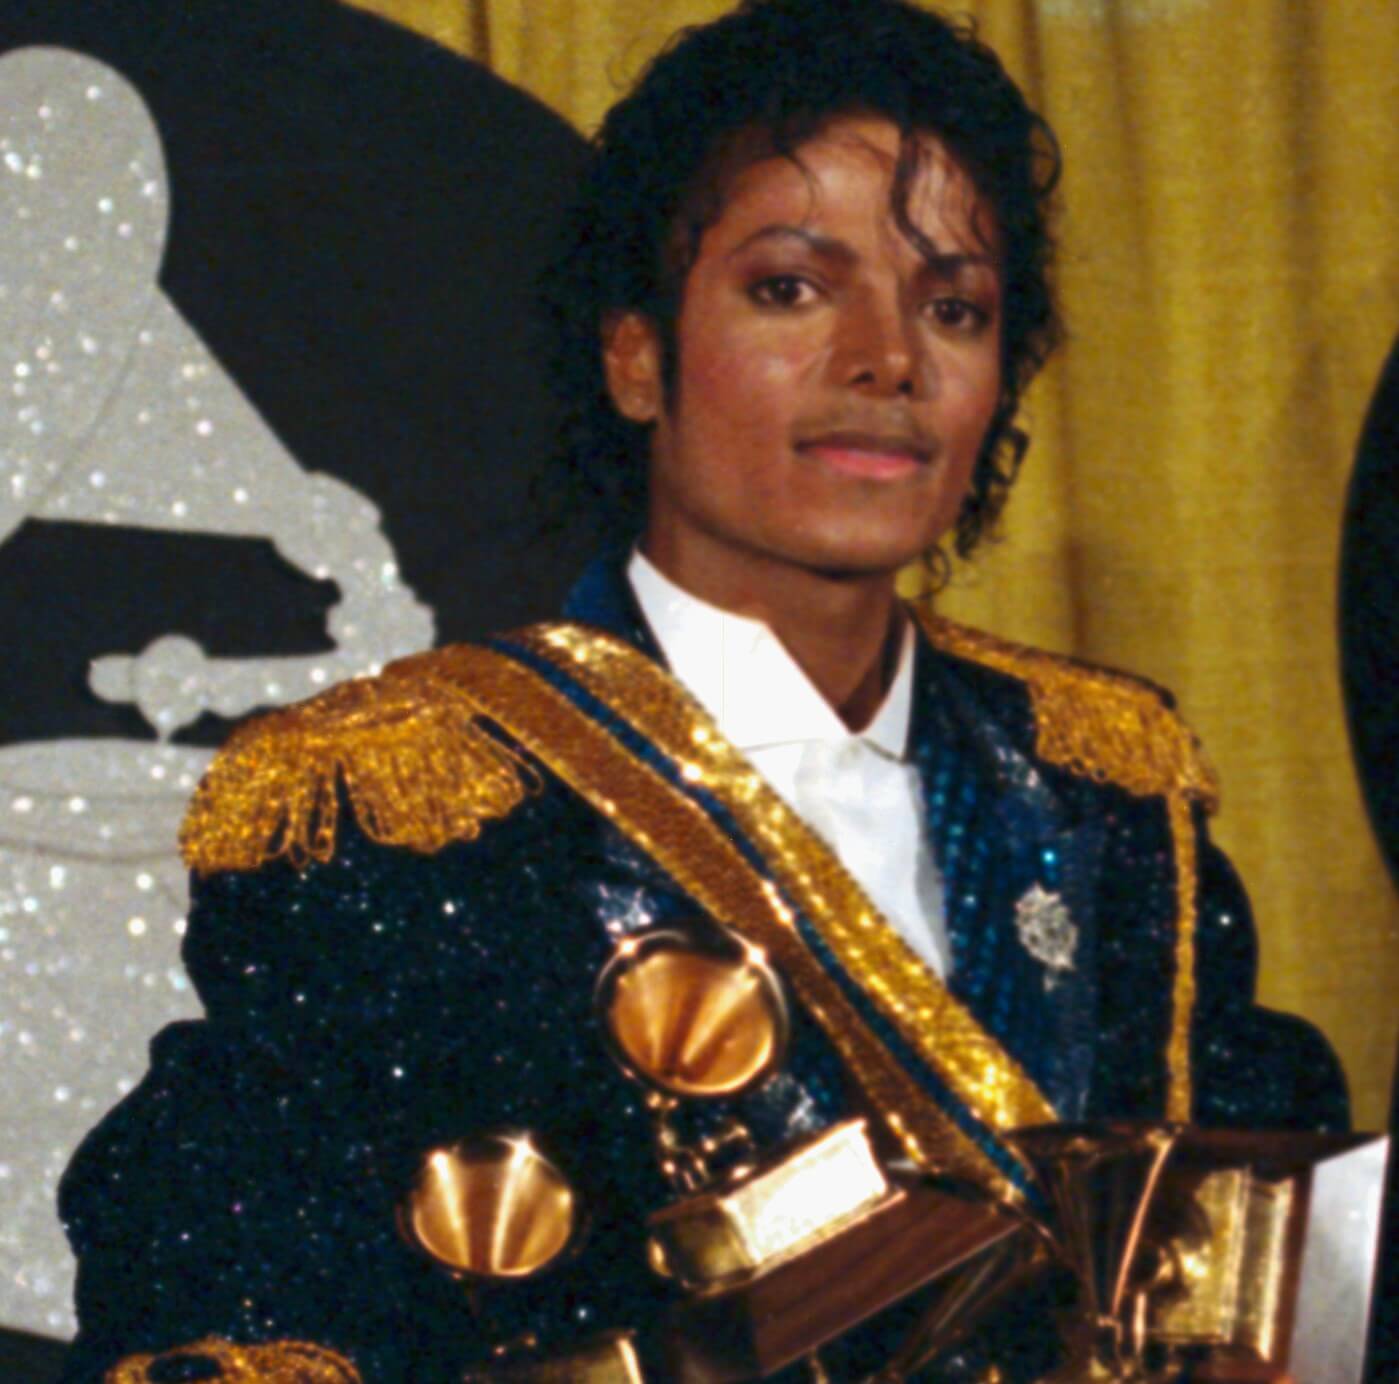 "Man in the Mirror" singer Michael Jackson wearing blue